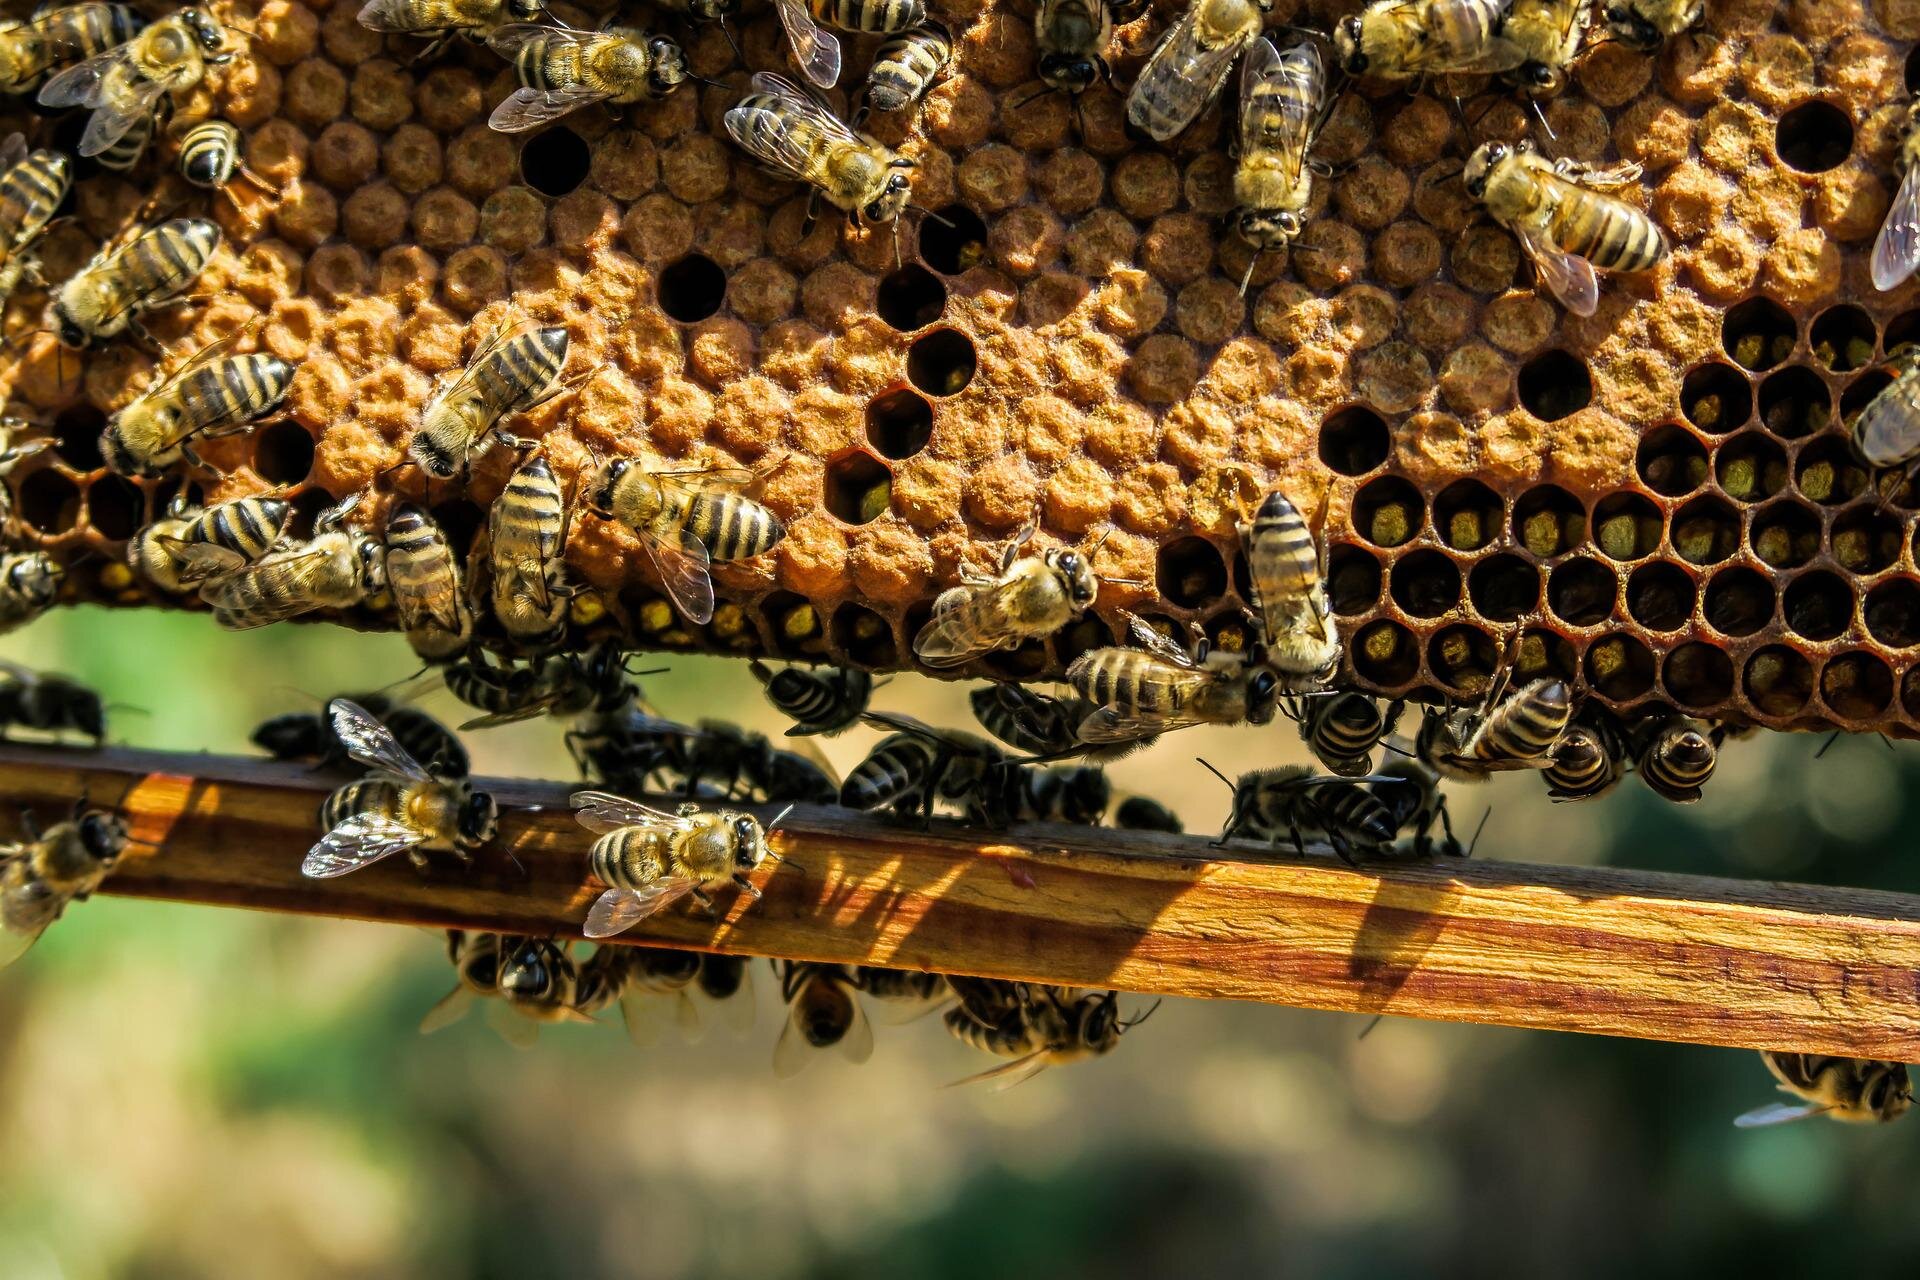 Extreme heat waves threaten honeybee fertility and trigger sudden death